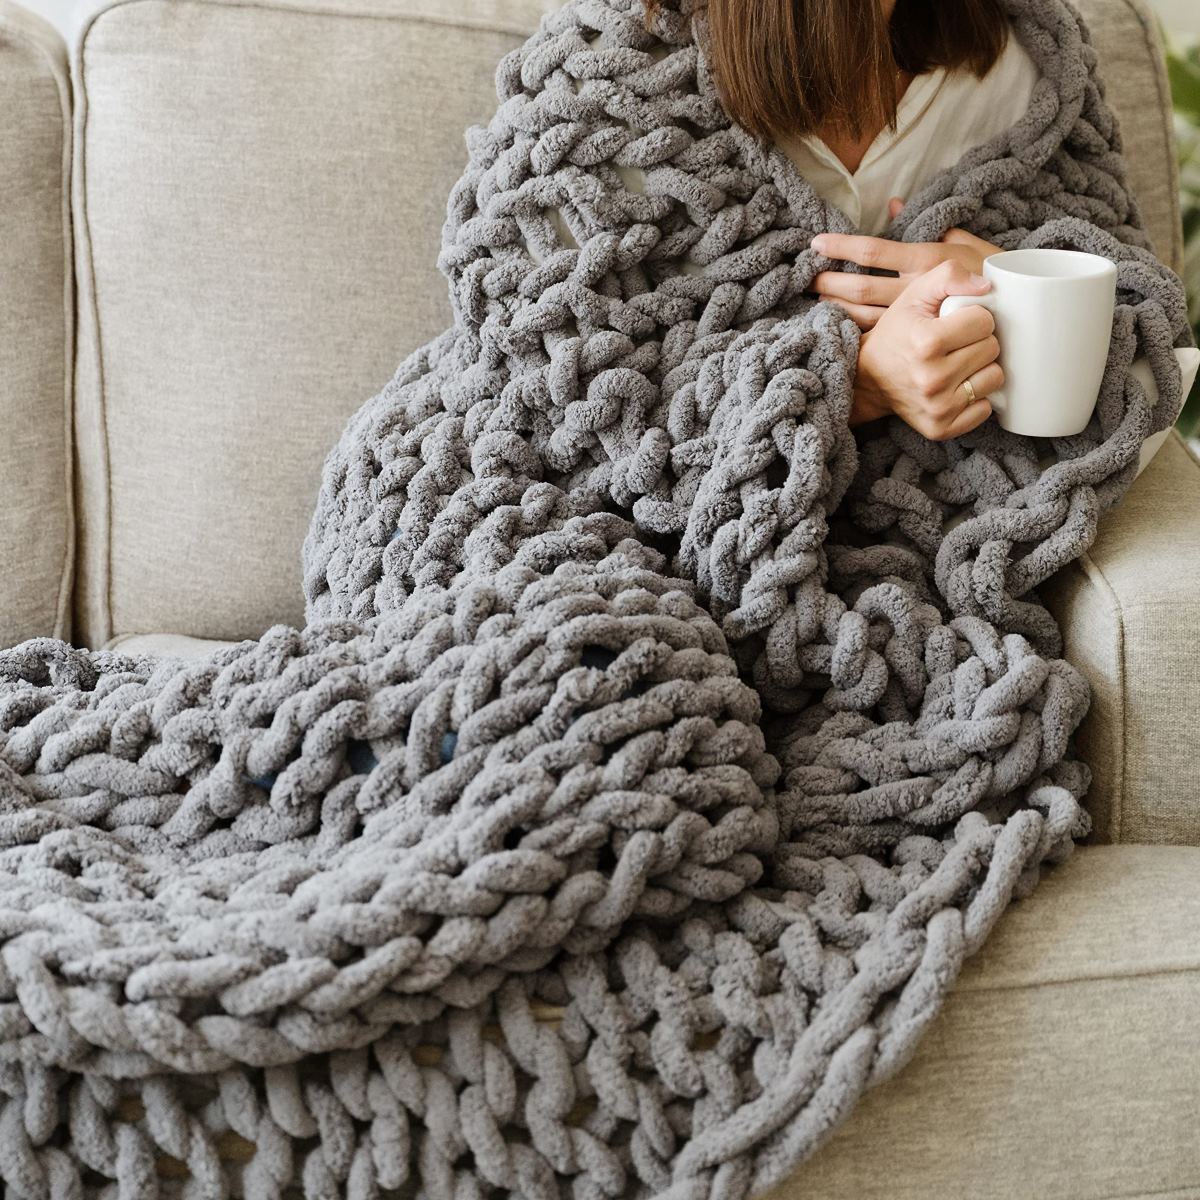 How to Repair a Crochet Blanket